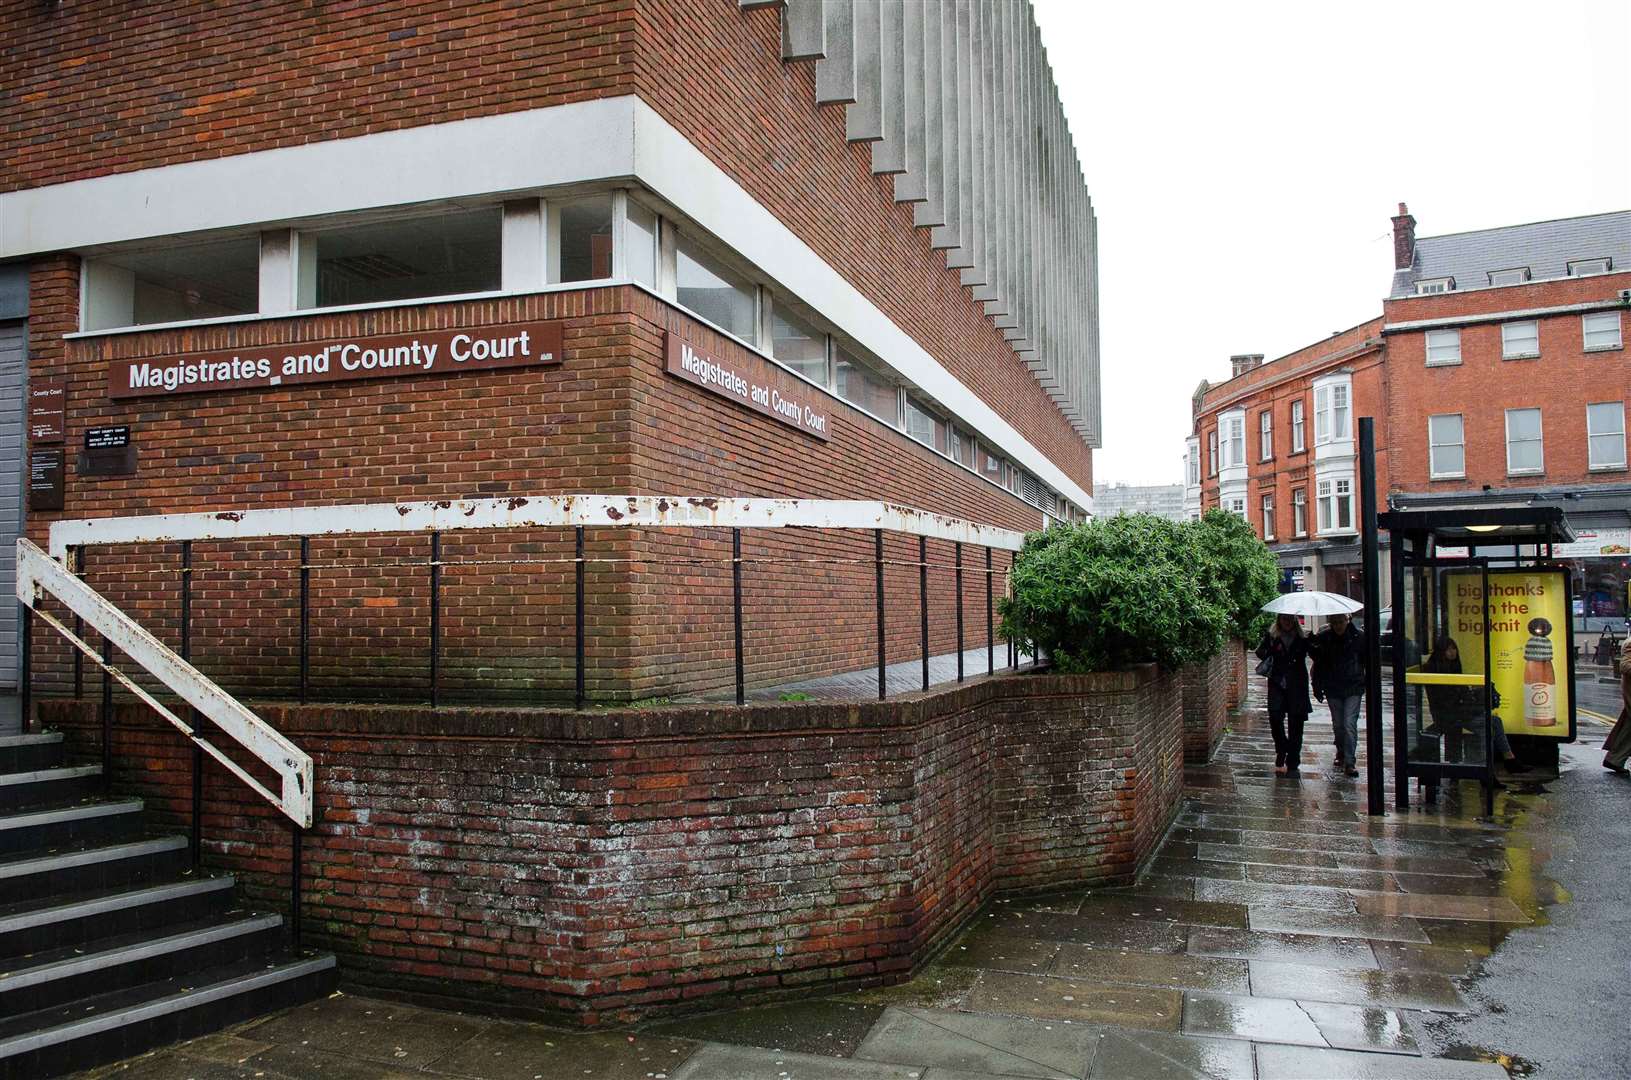 Maragte Magistrates' Court